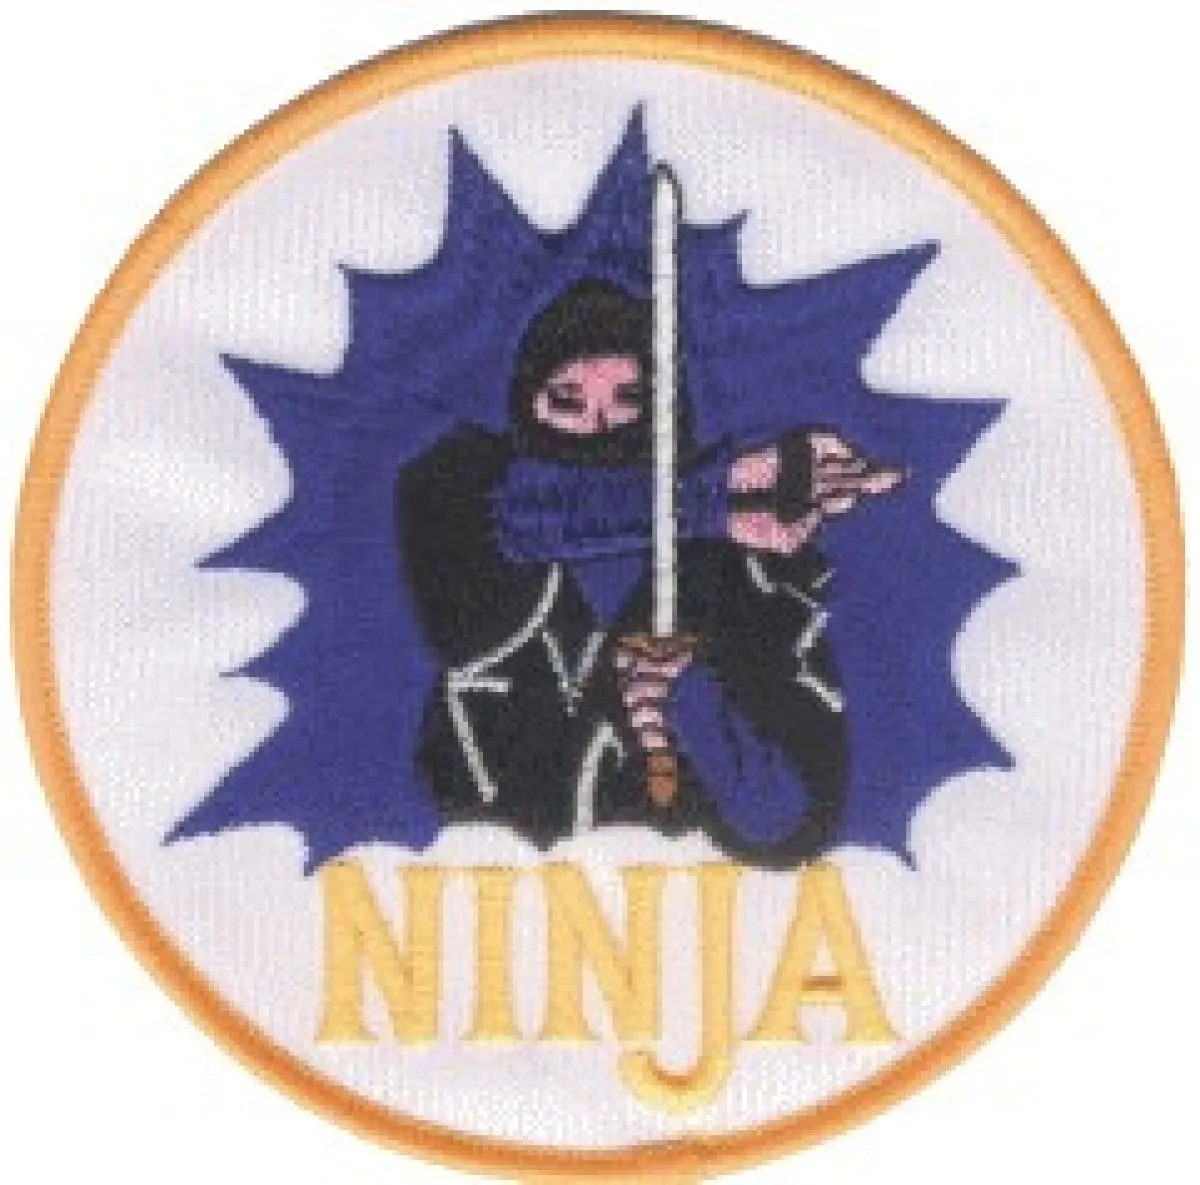 Ninja-patch